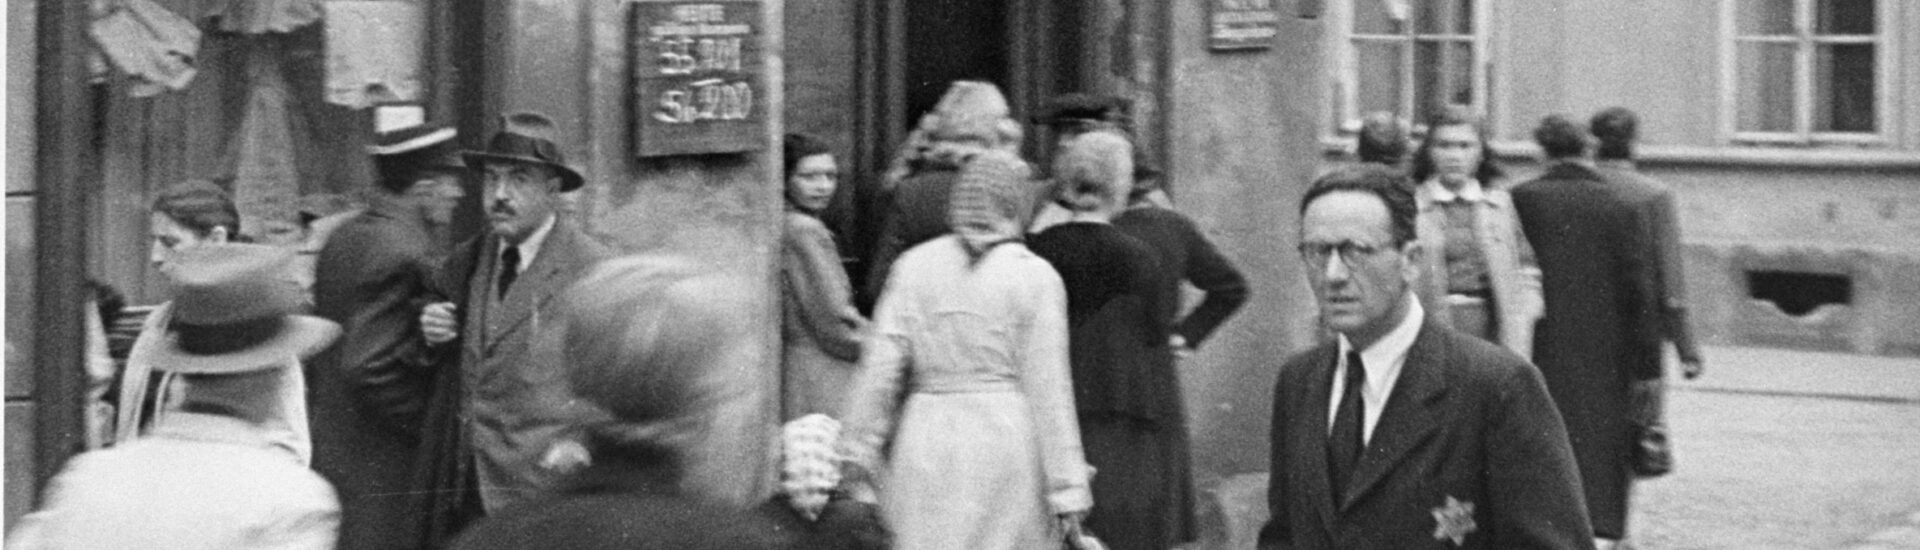 190102_Terezin Ghetto 1943